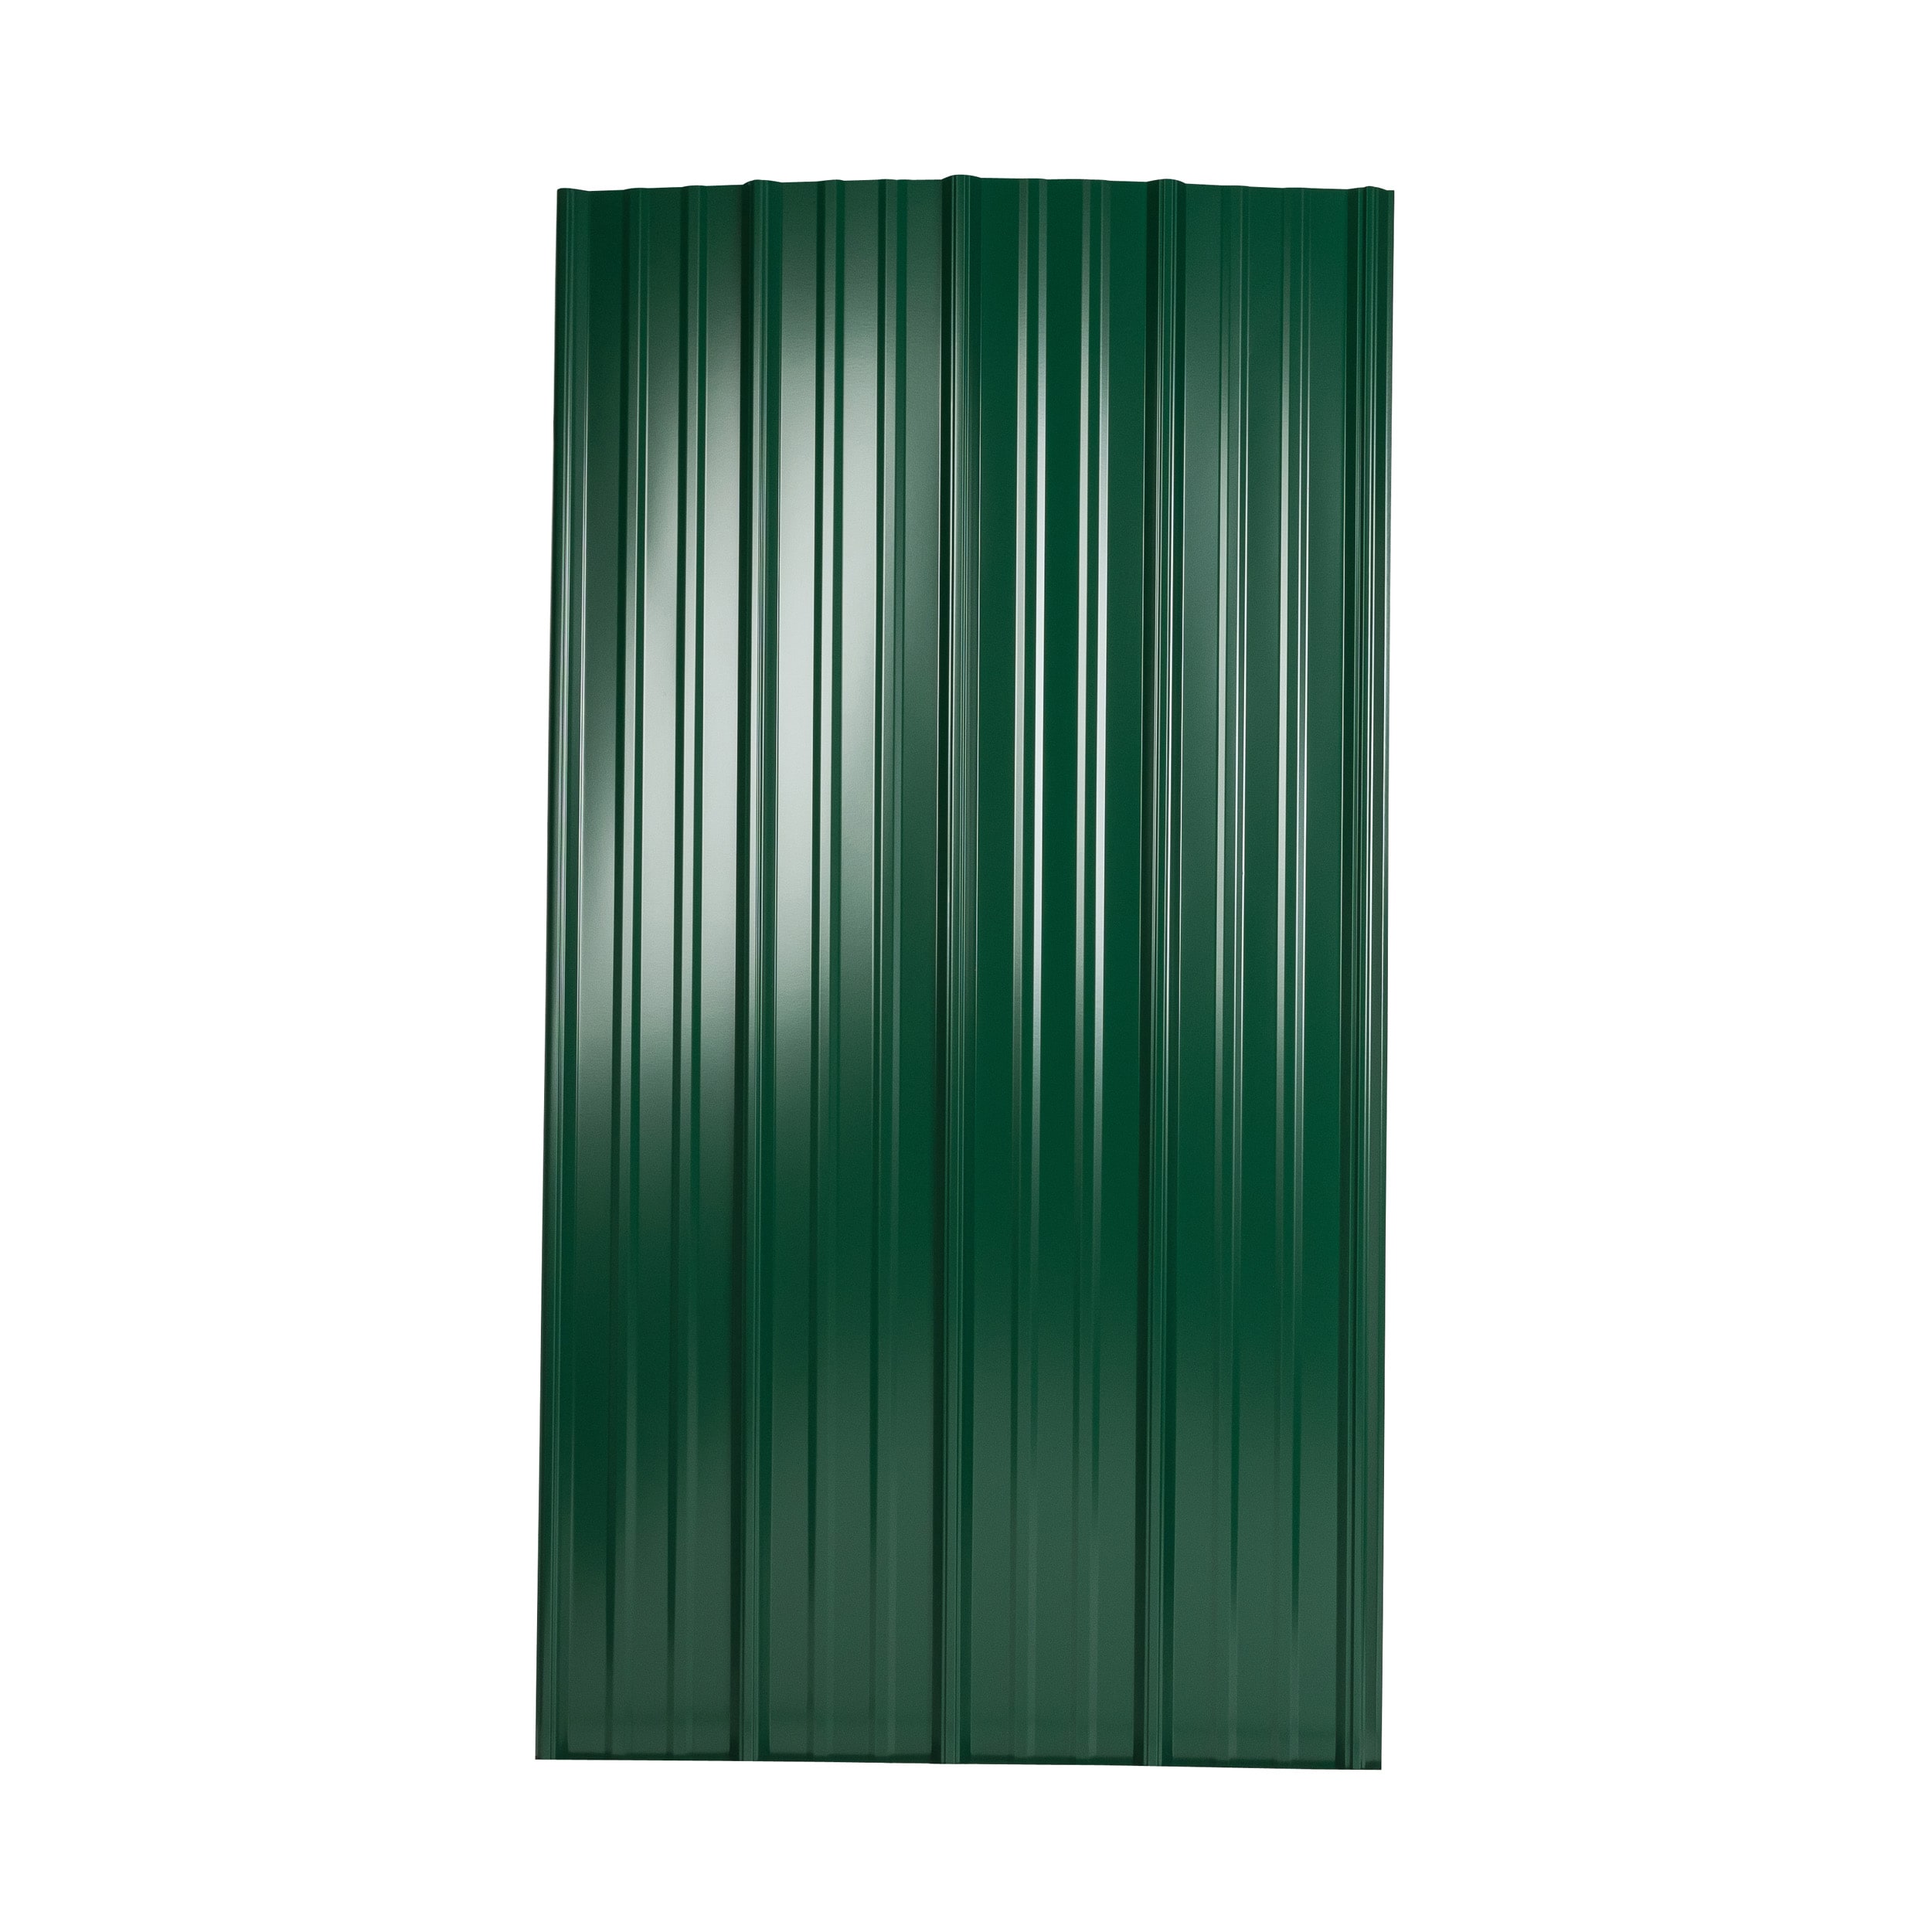 Corrugated Metal in Classic Slate Green Clear